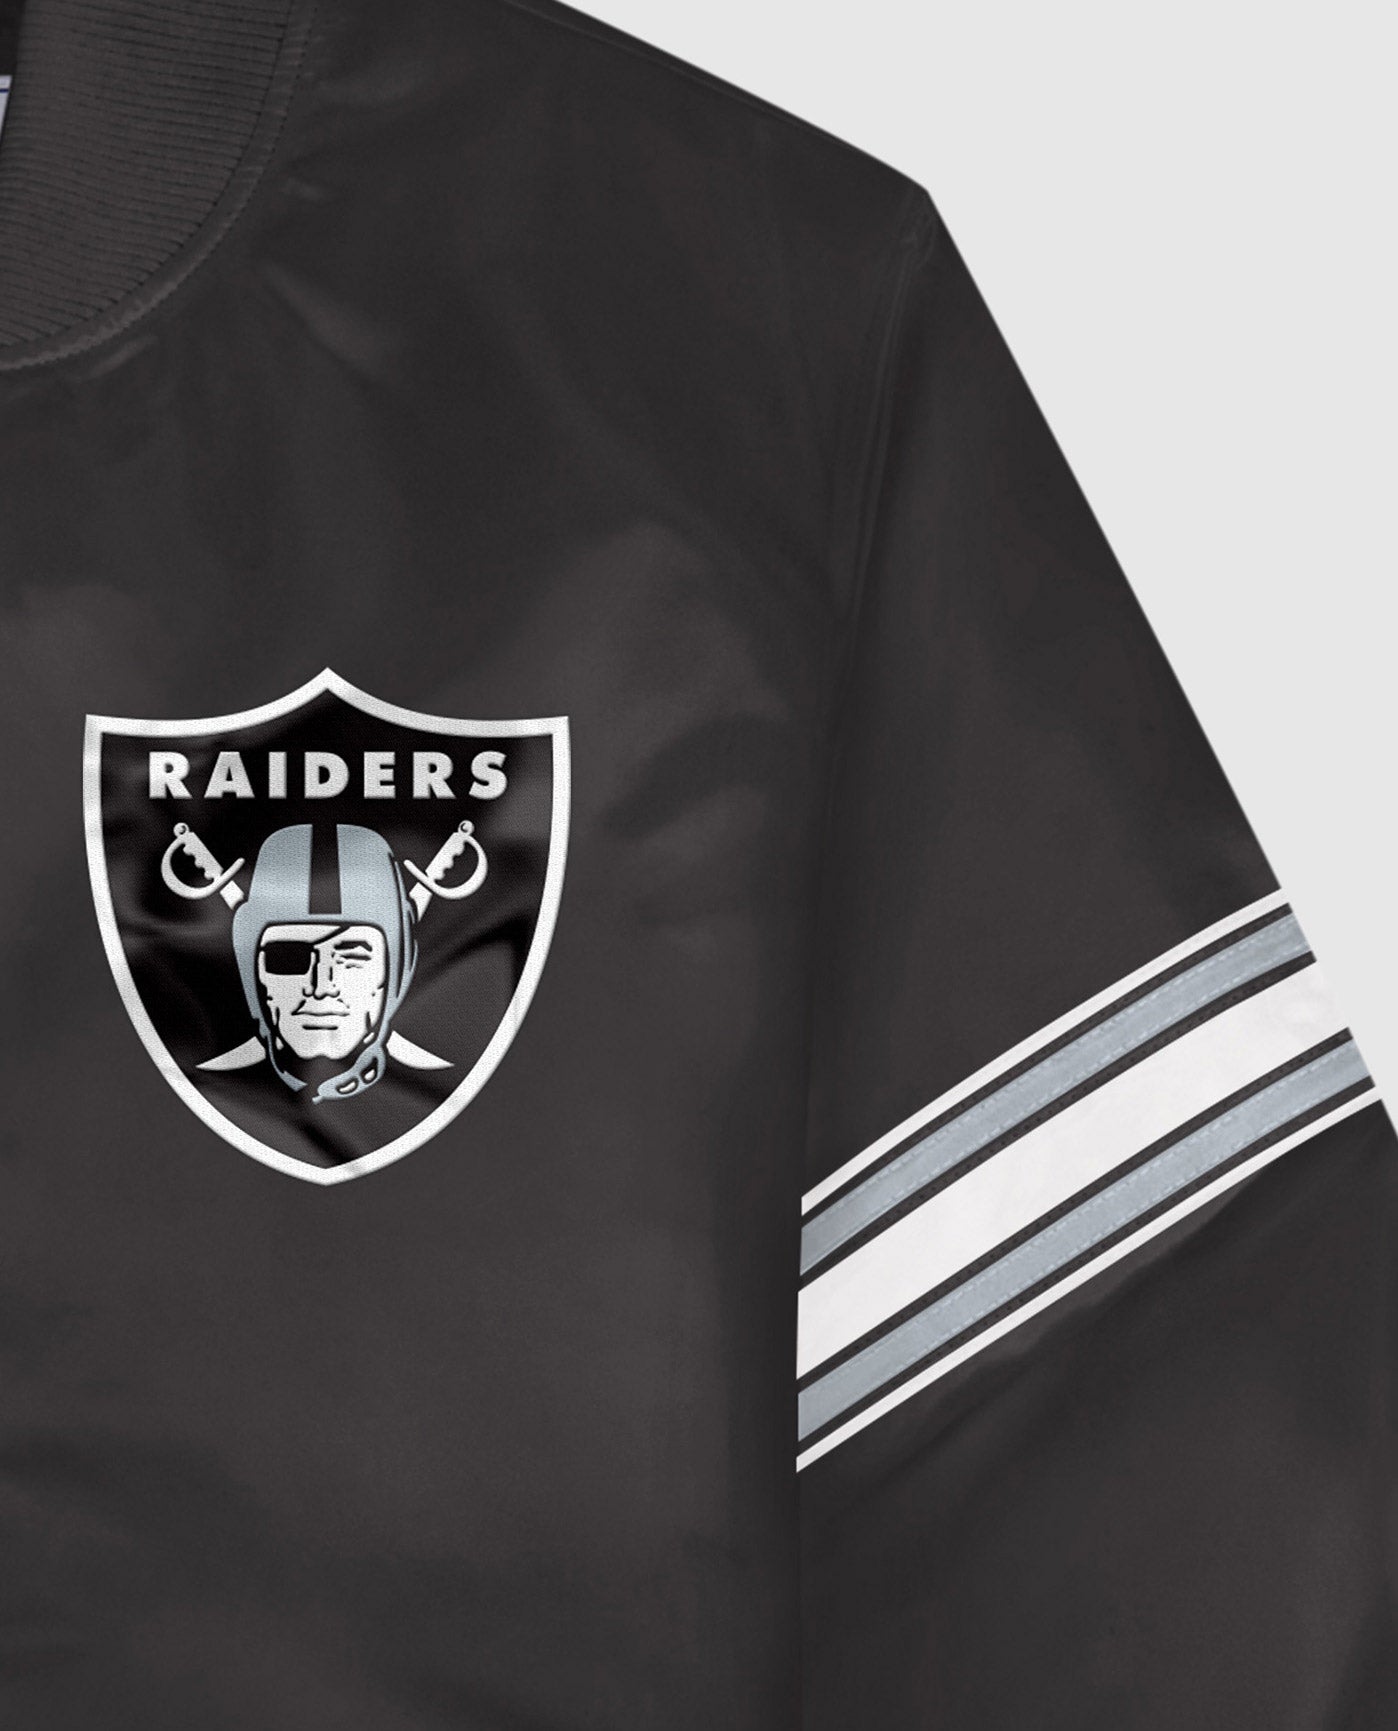 Las Vegas Raiders Starter Historic Logo Renegade Satin Varsity Full-Snap  Jacket - White/Black